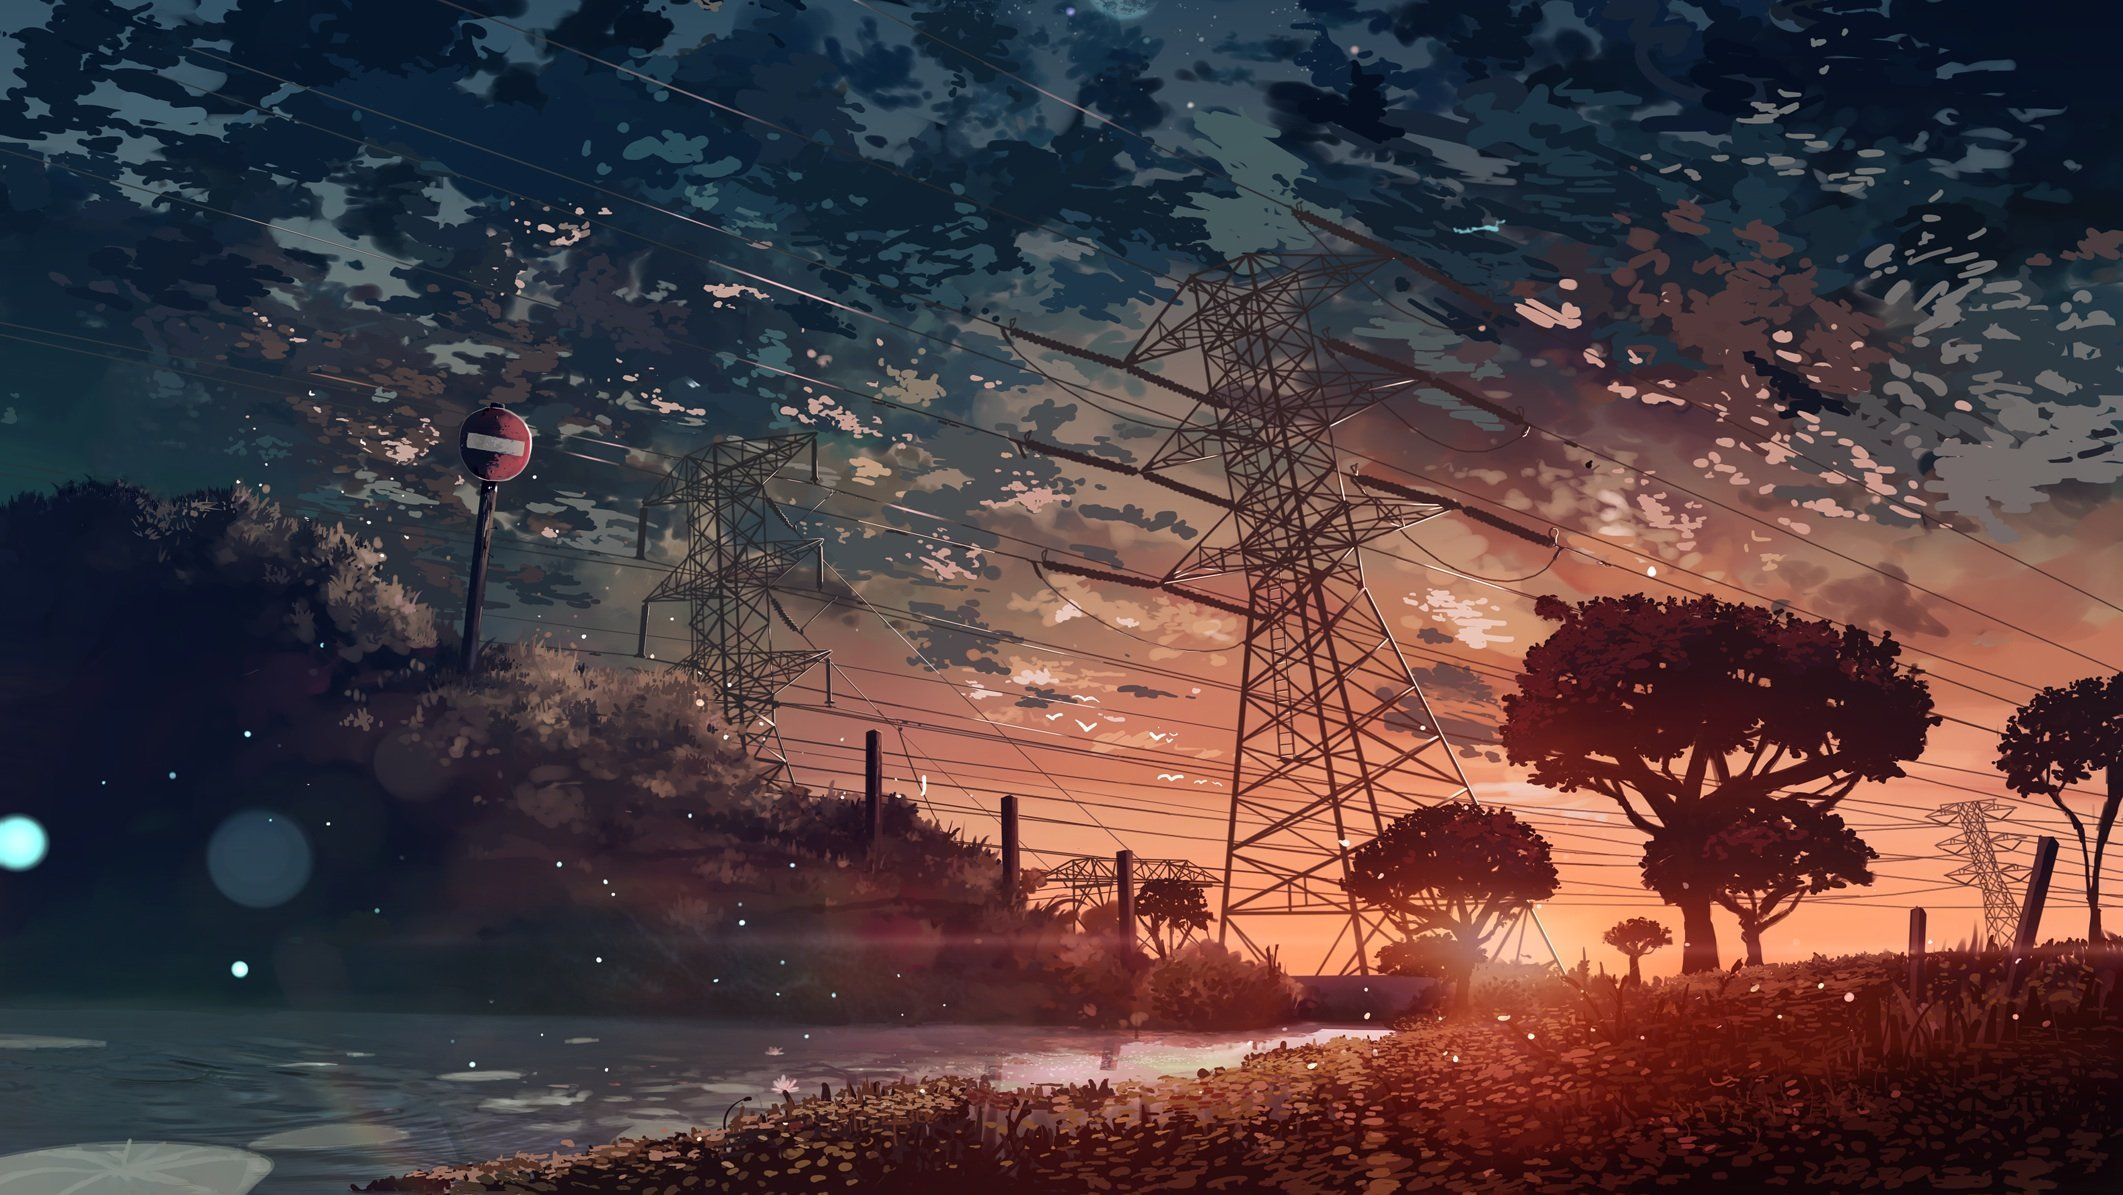 Alone Anime Boy Watching Sunset Digital Stock Illustration 2259748825 |  Shutterstock